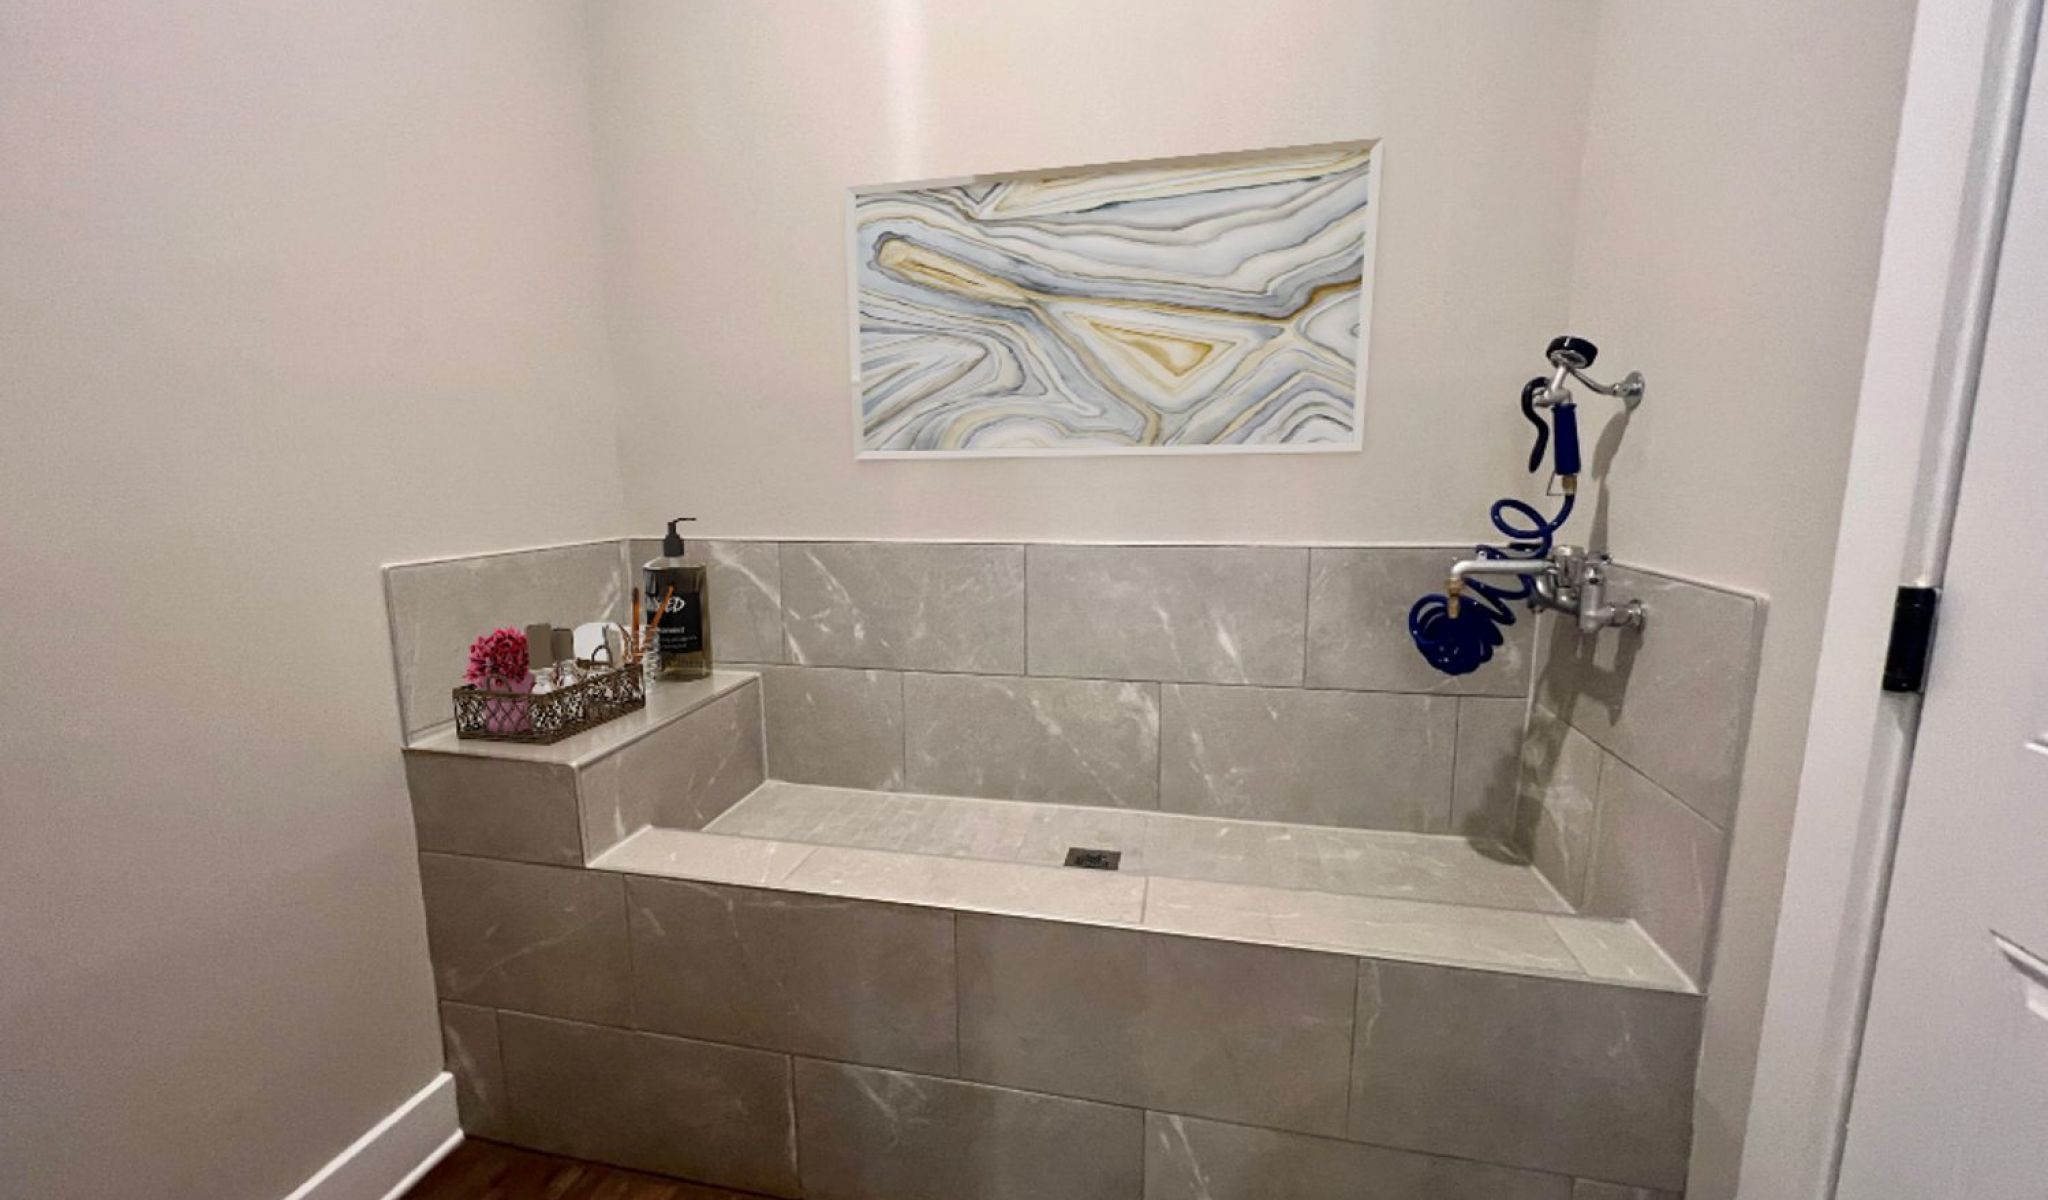 Townhomes at Bridlestone large soaking tub with marble tile backsplash in modern bathroom